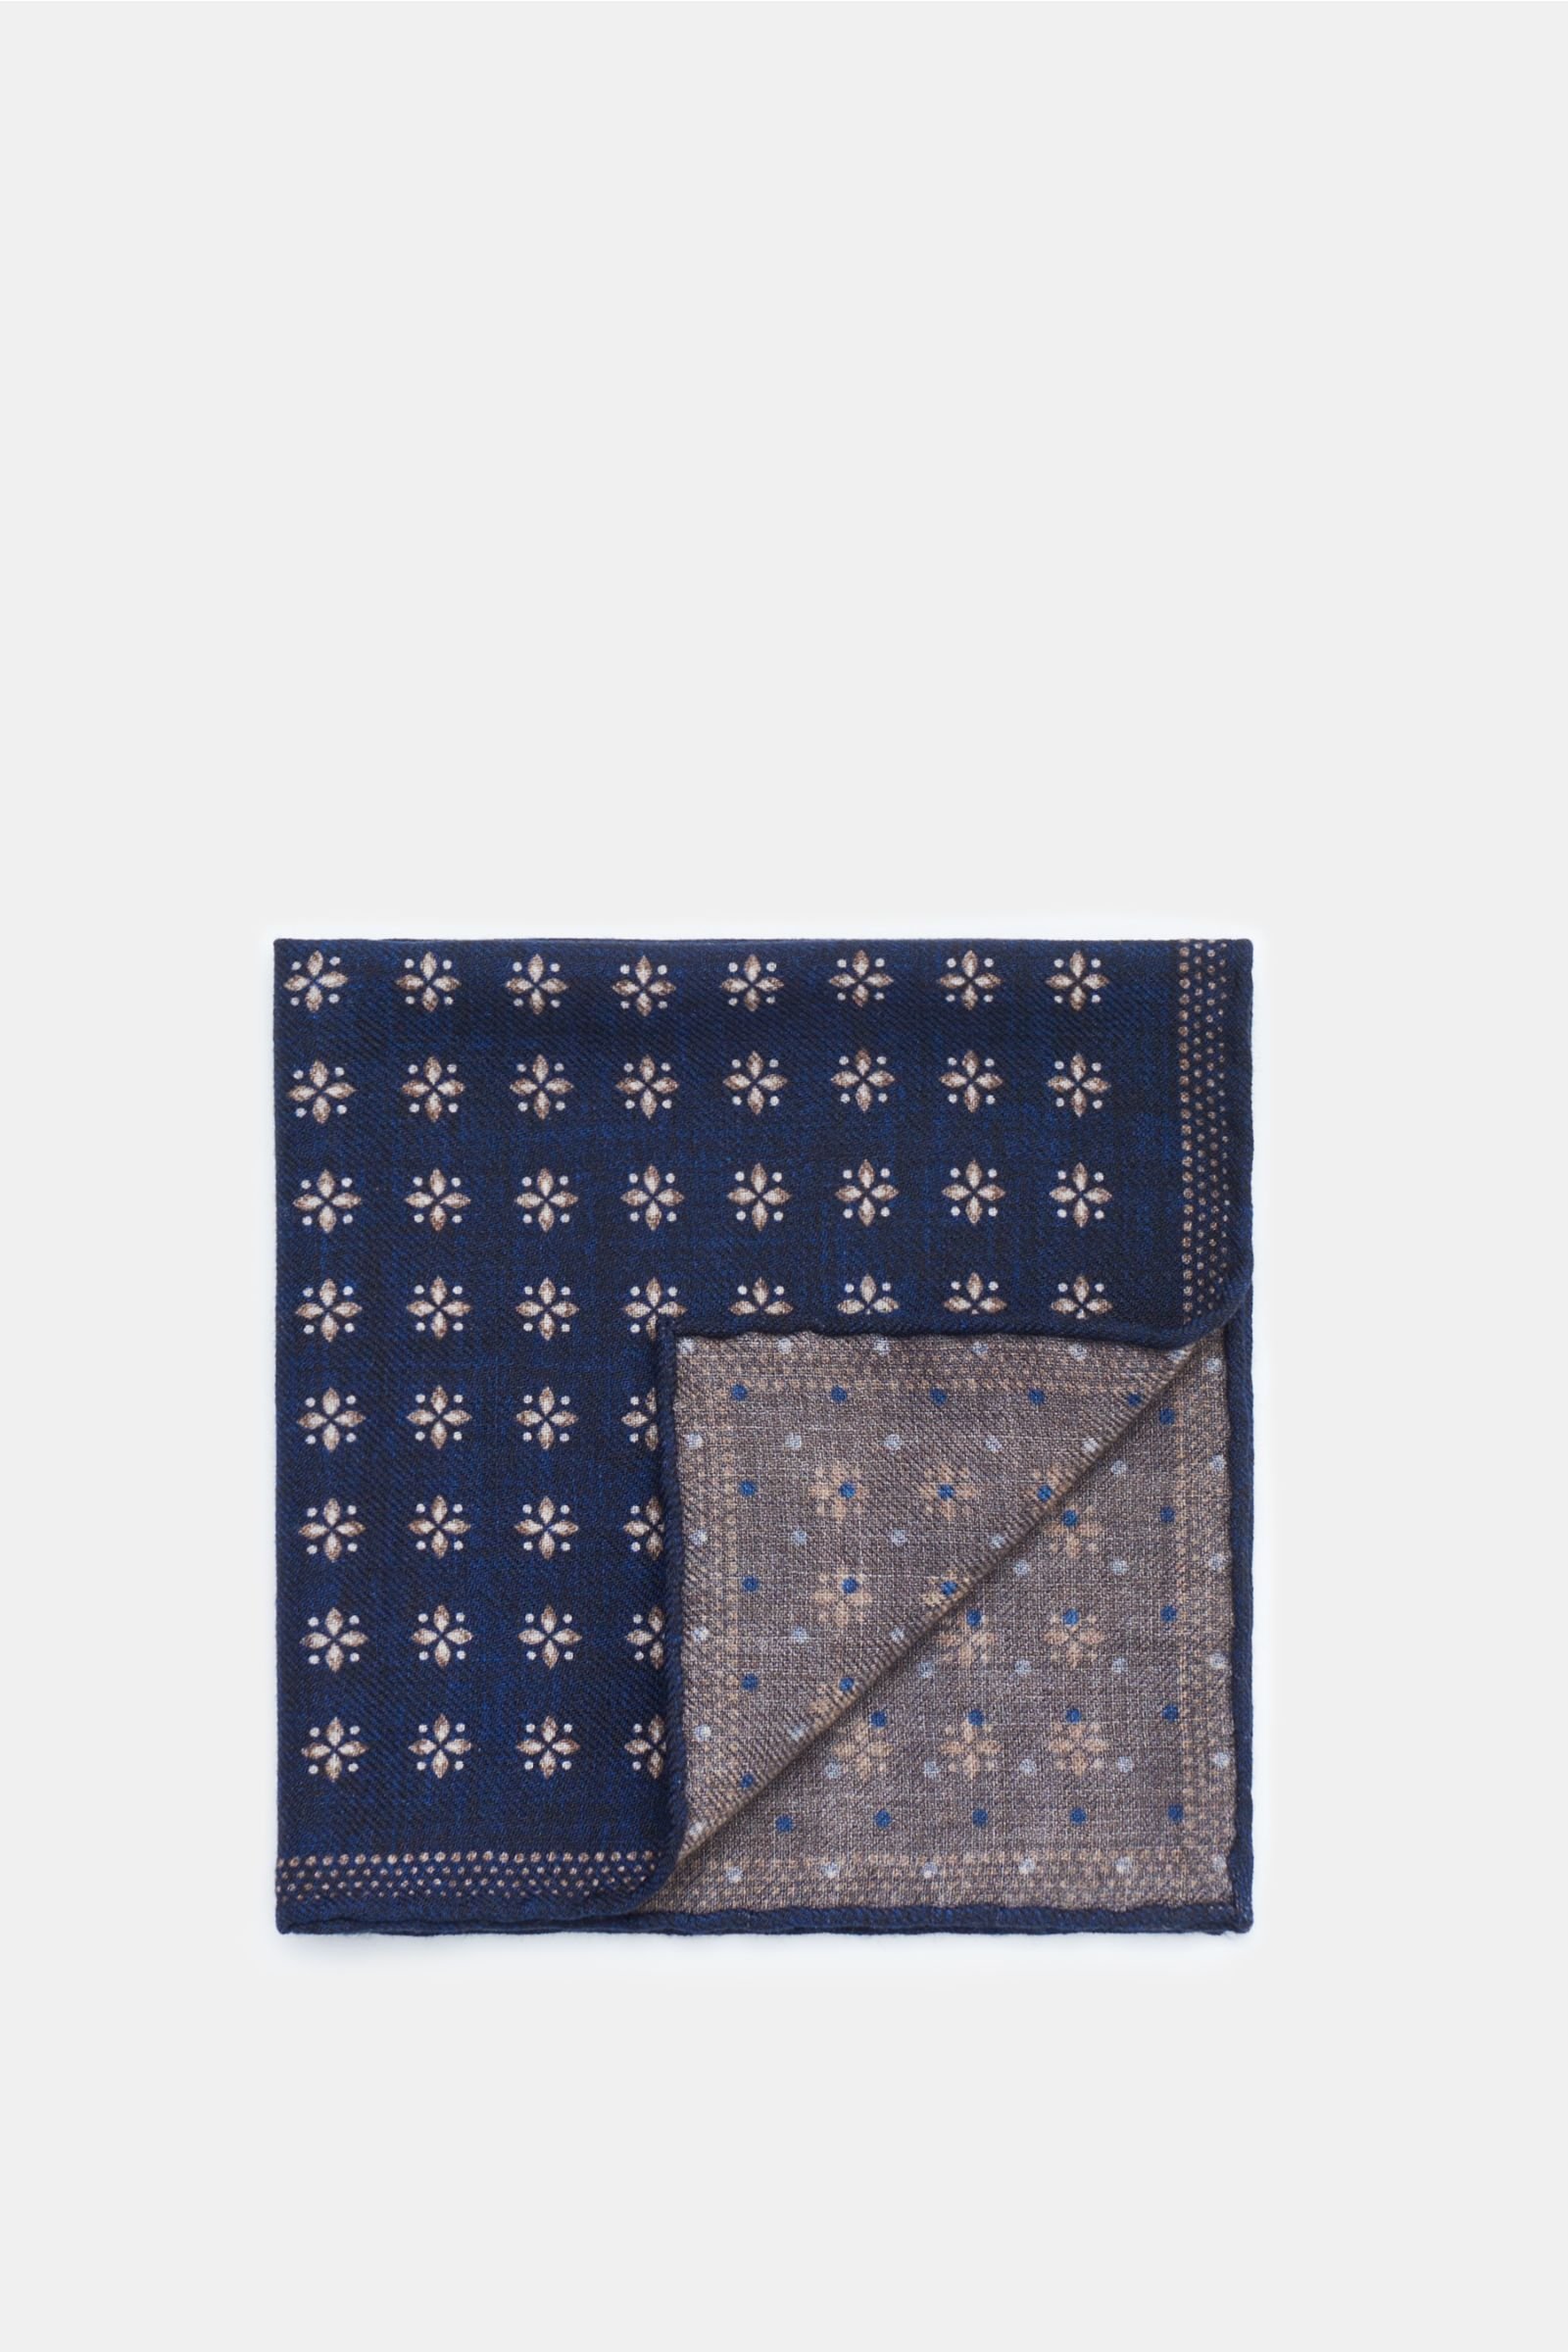 Pocket square navy/grey-brown patterned